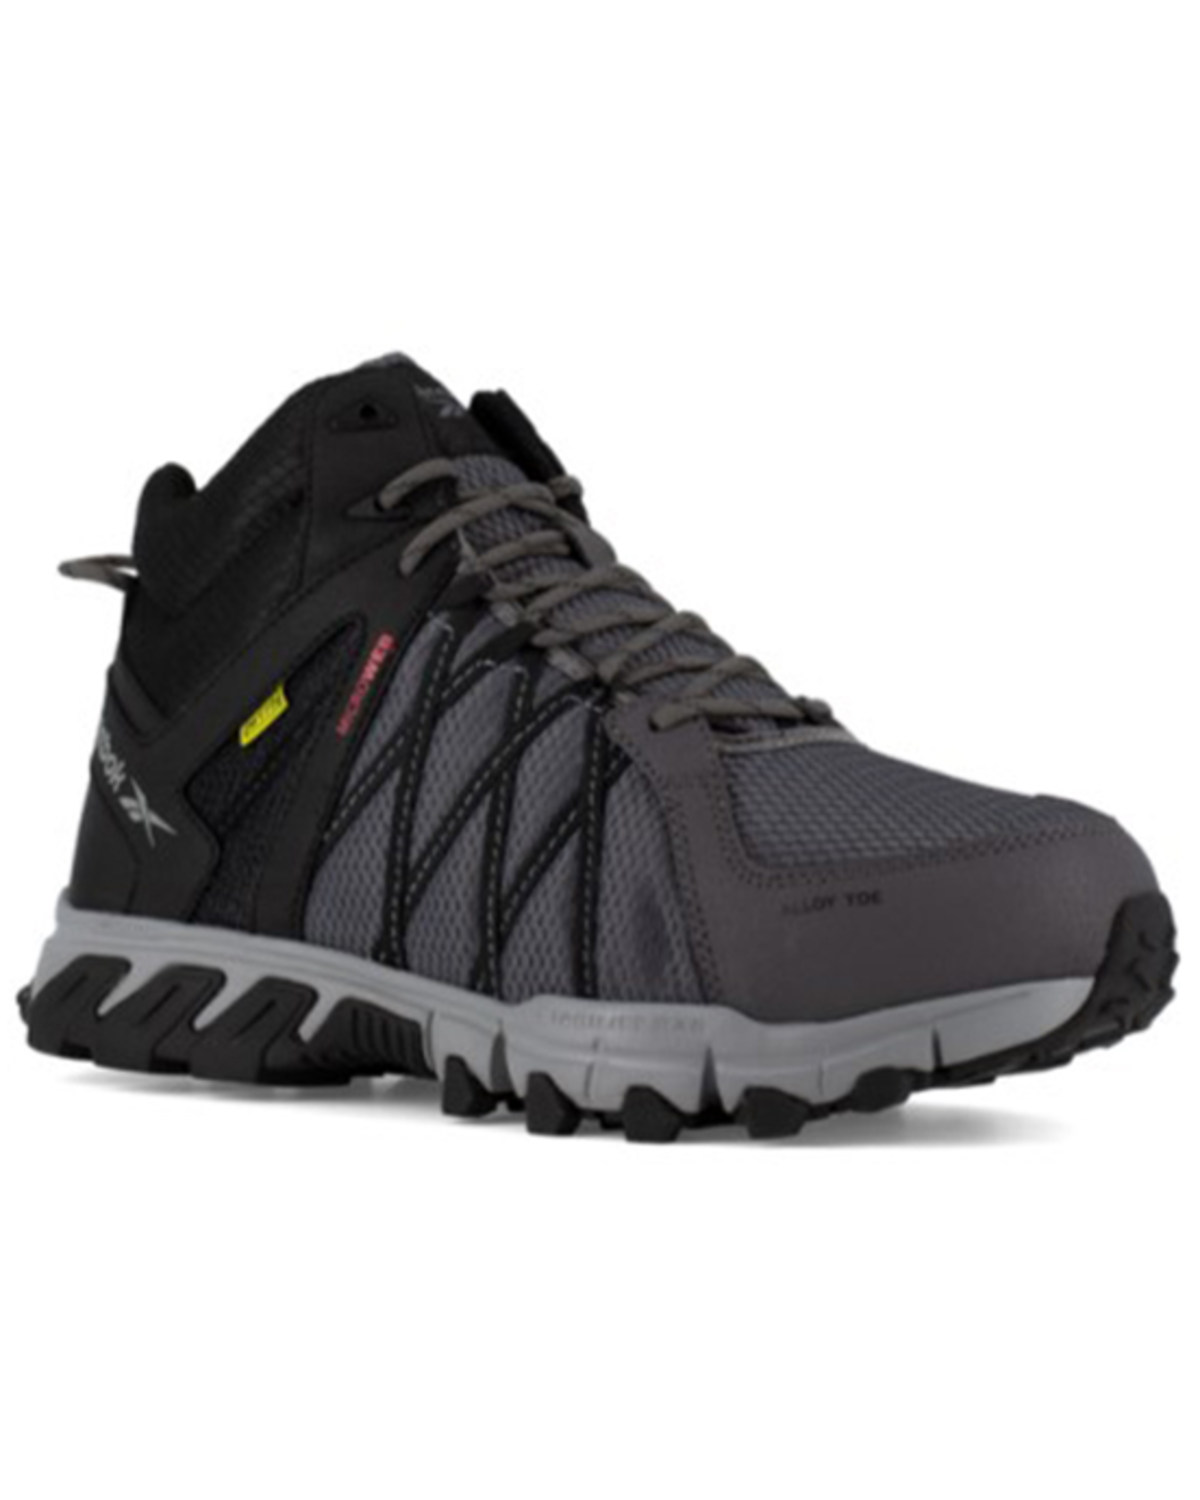 Reebok Men's Athletic Met Guard Hiker Work Boots - Alloy Toe